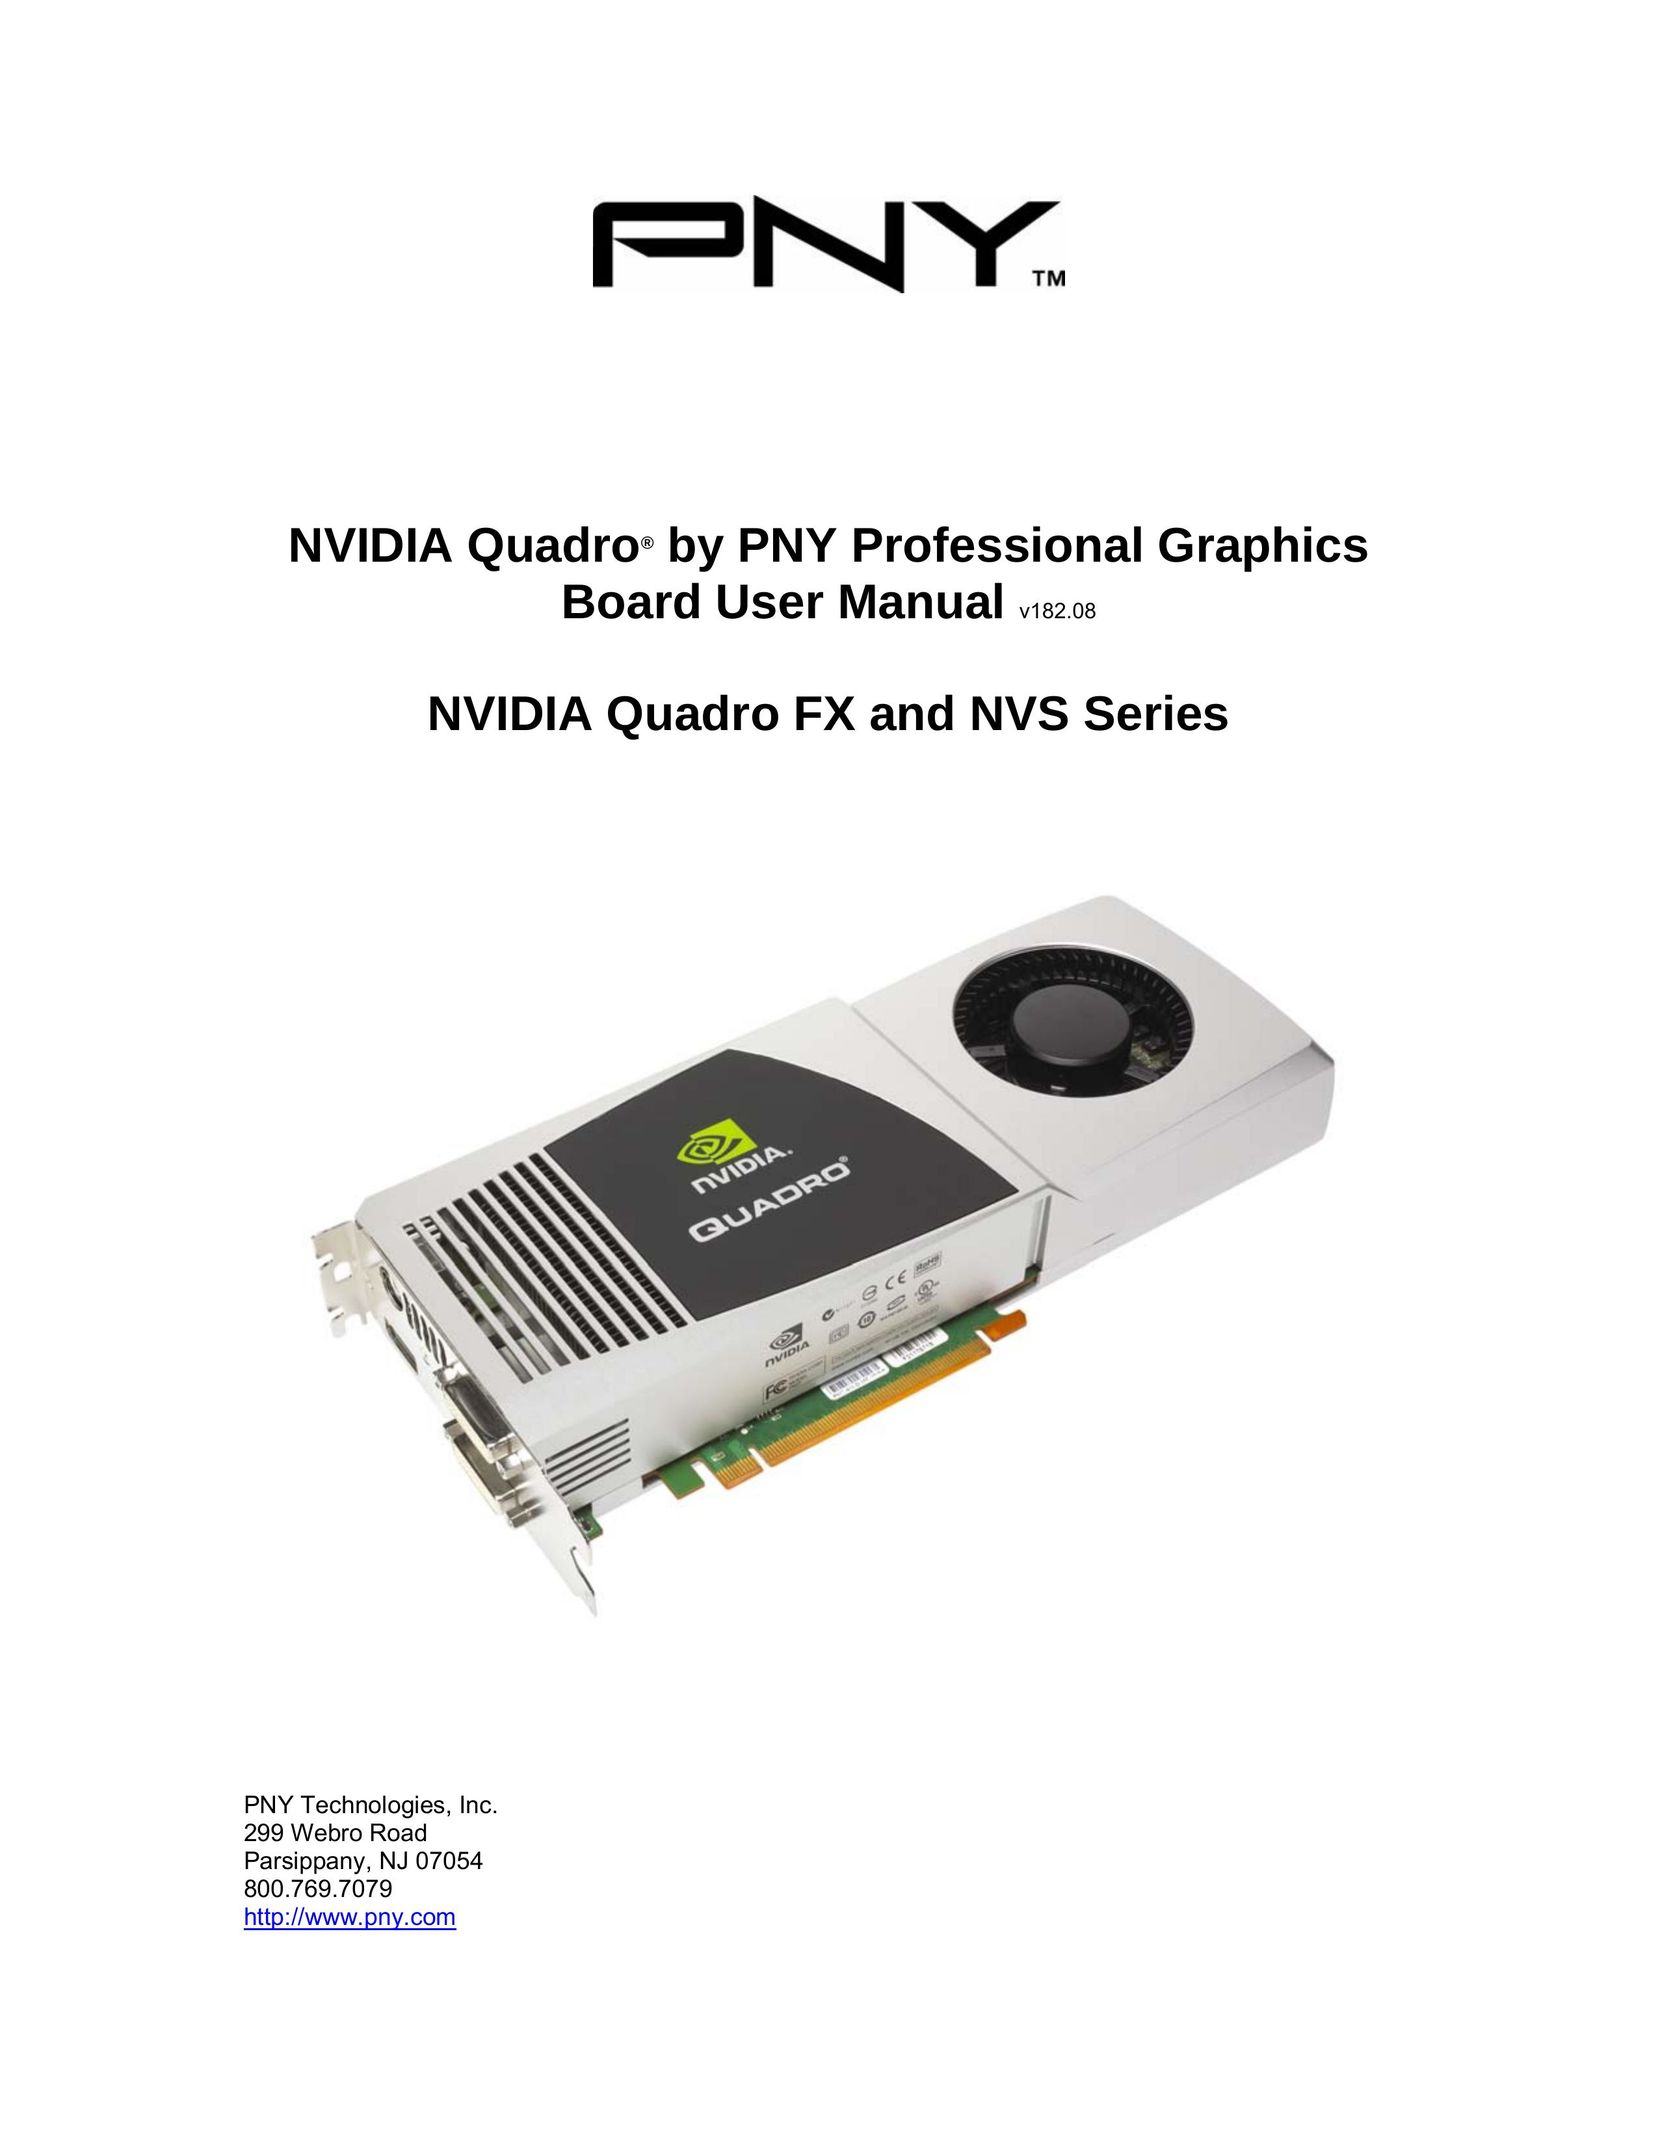 PNY FX 4800 SDI Computer Hardware User Manual